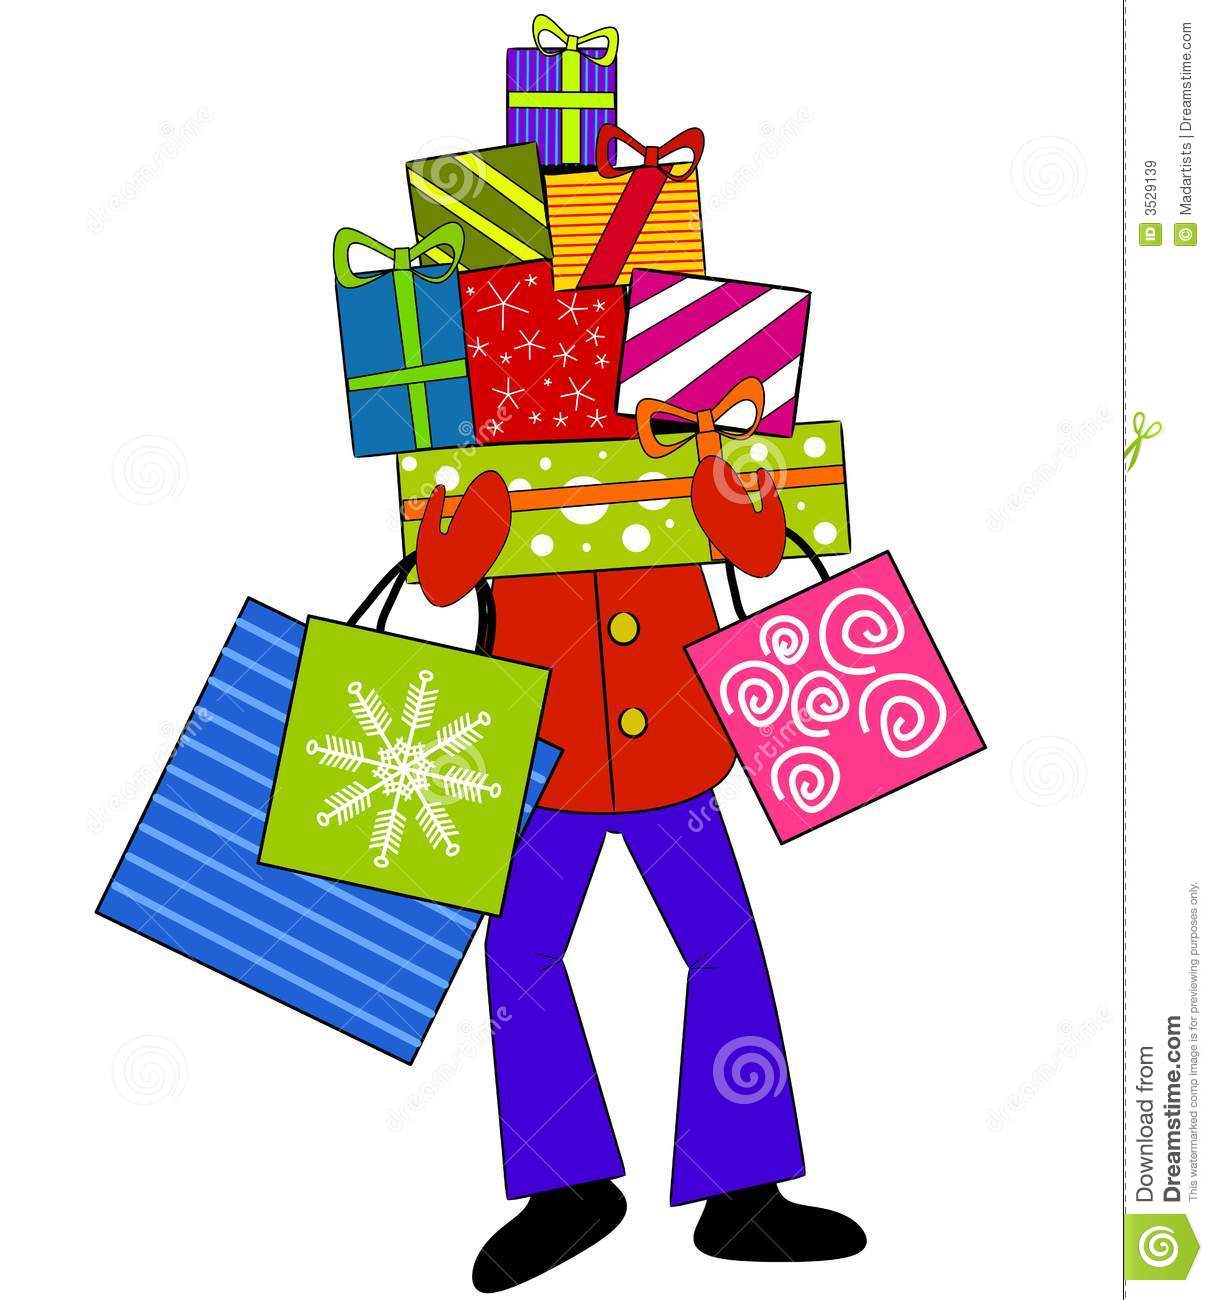 christmas shopping bags: Sant